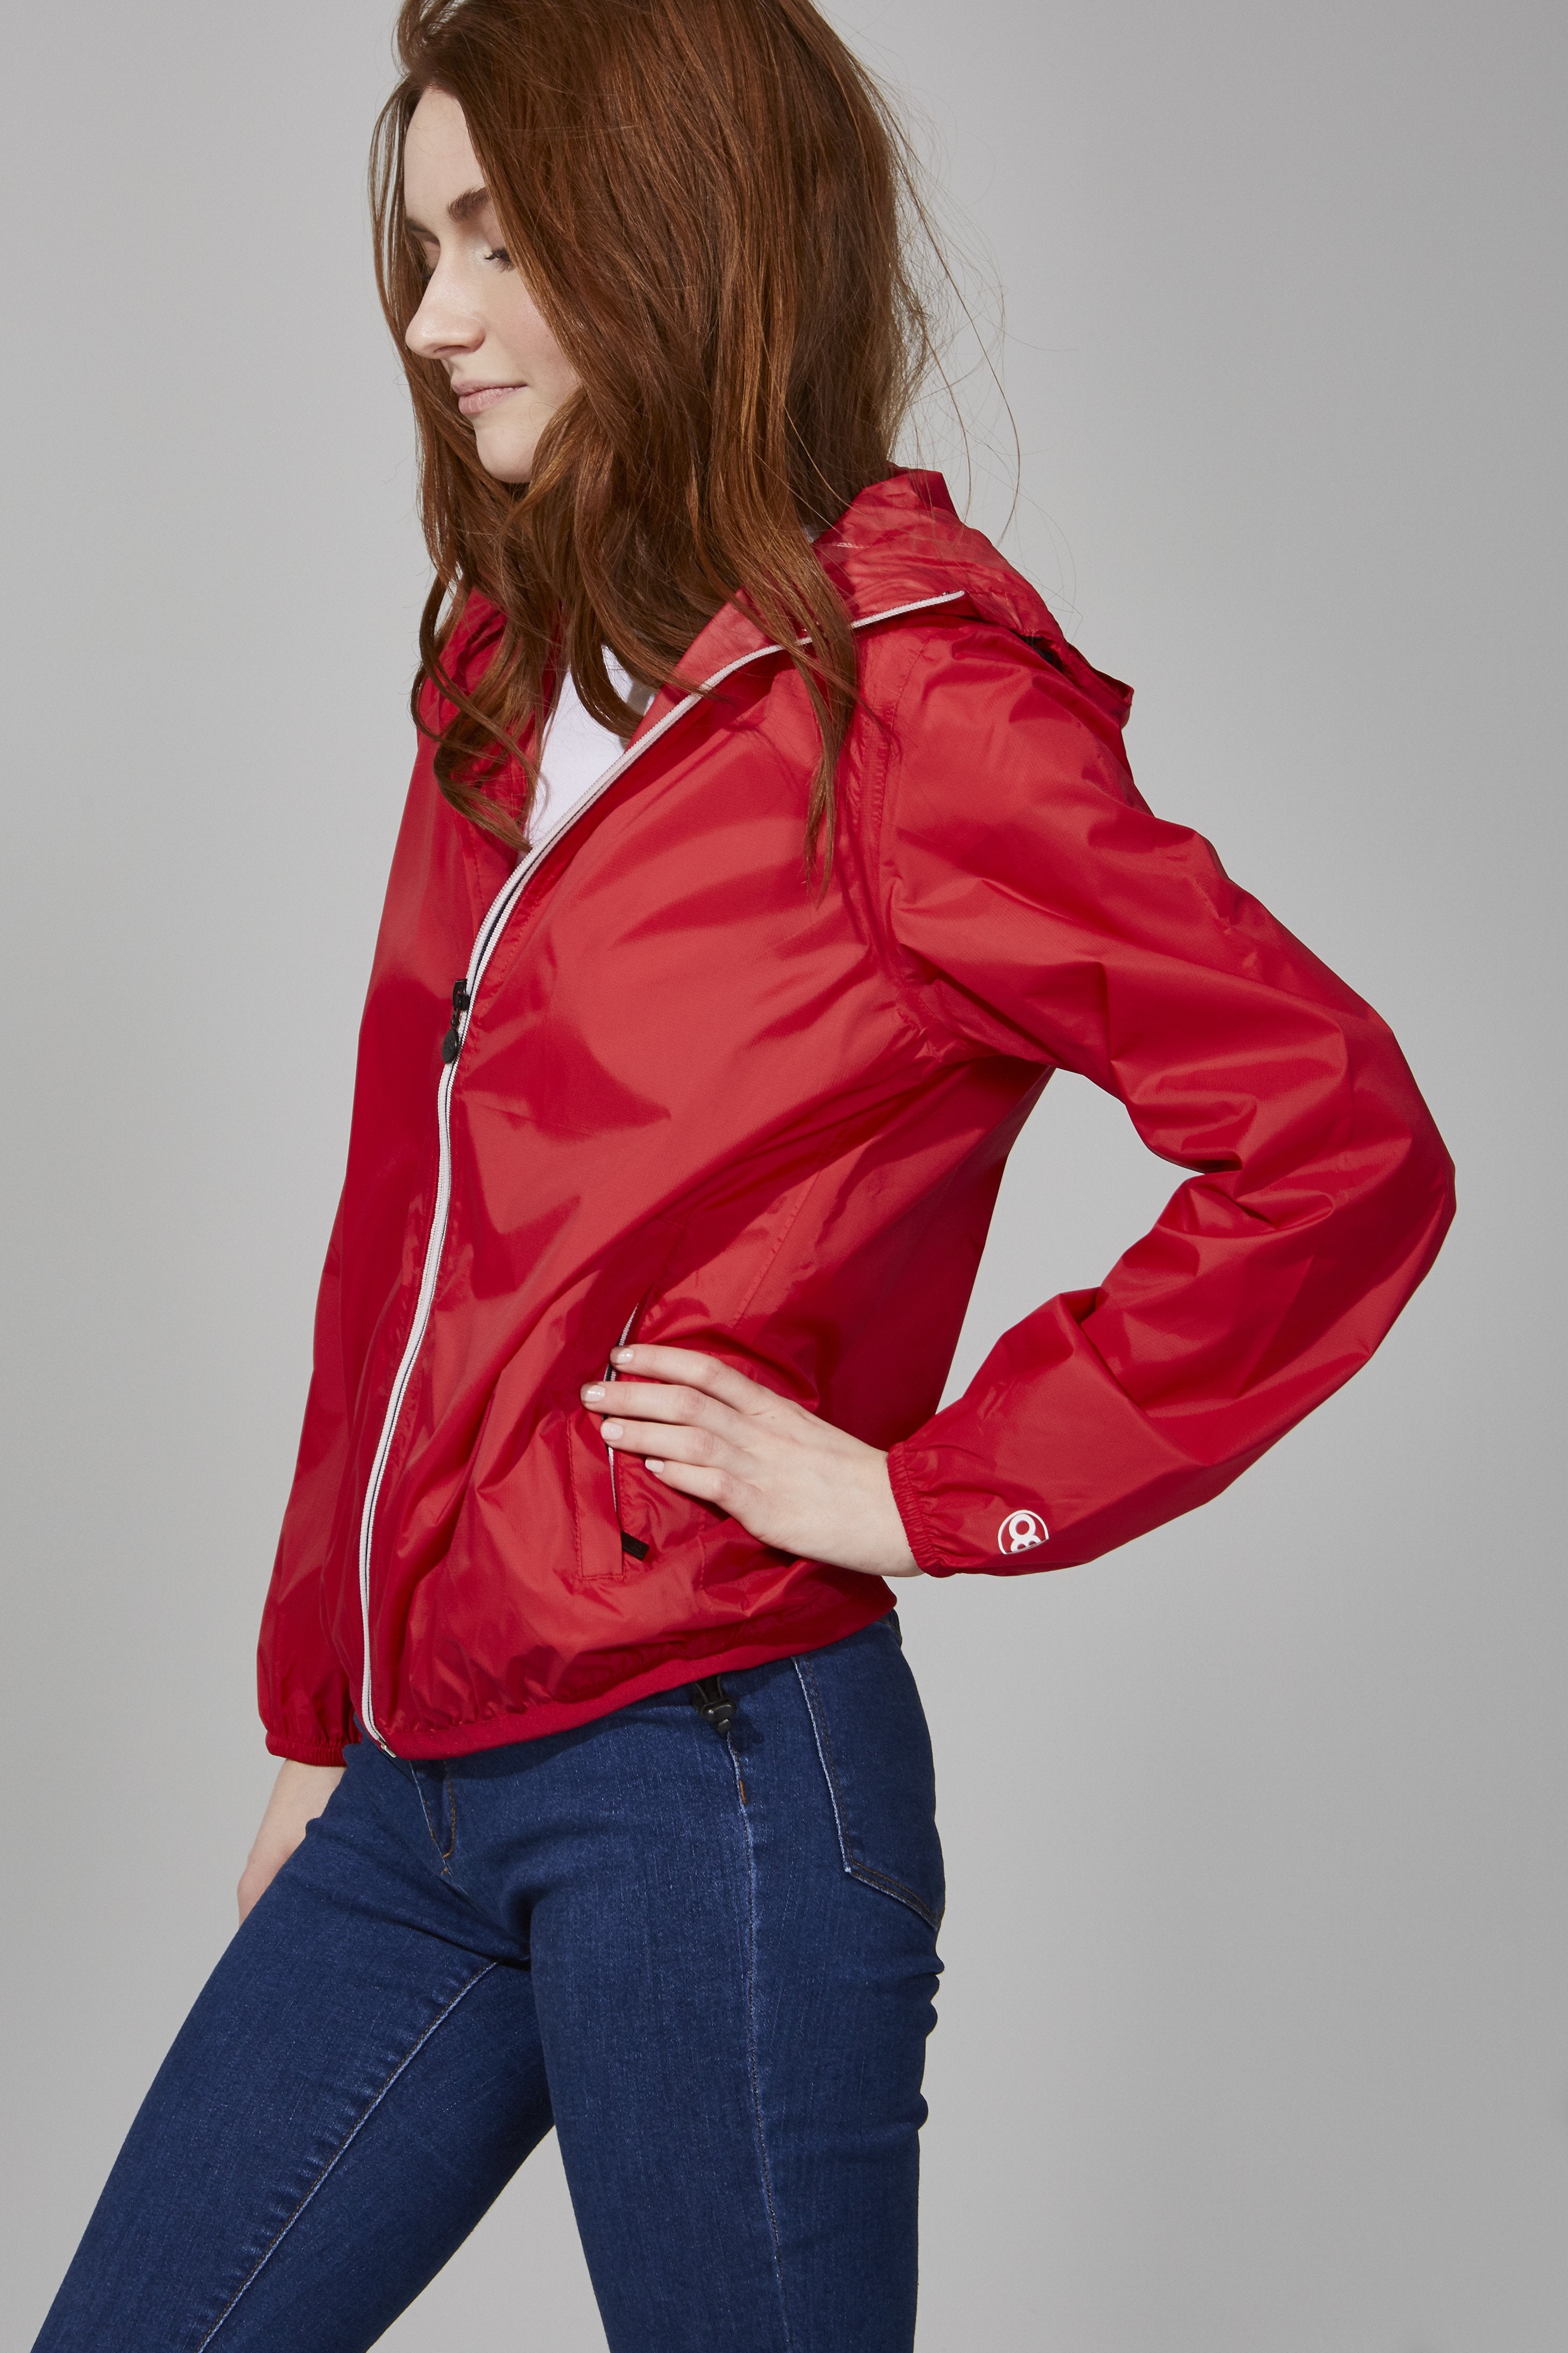 Sloane - Red Full Zip Packable Rain Jacket - O8lifestyle.